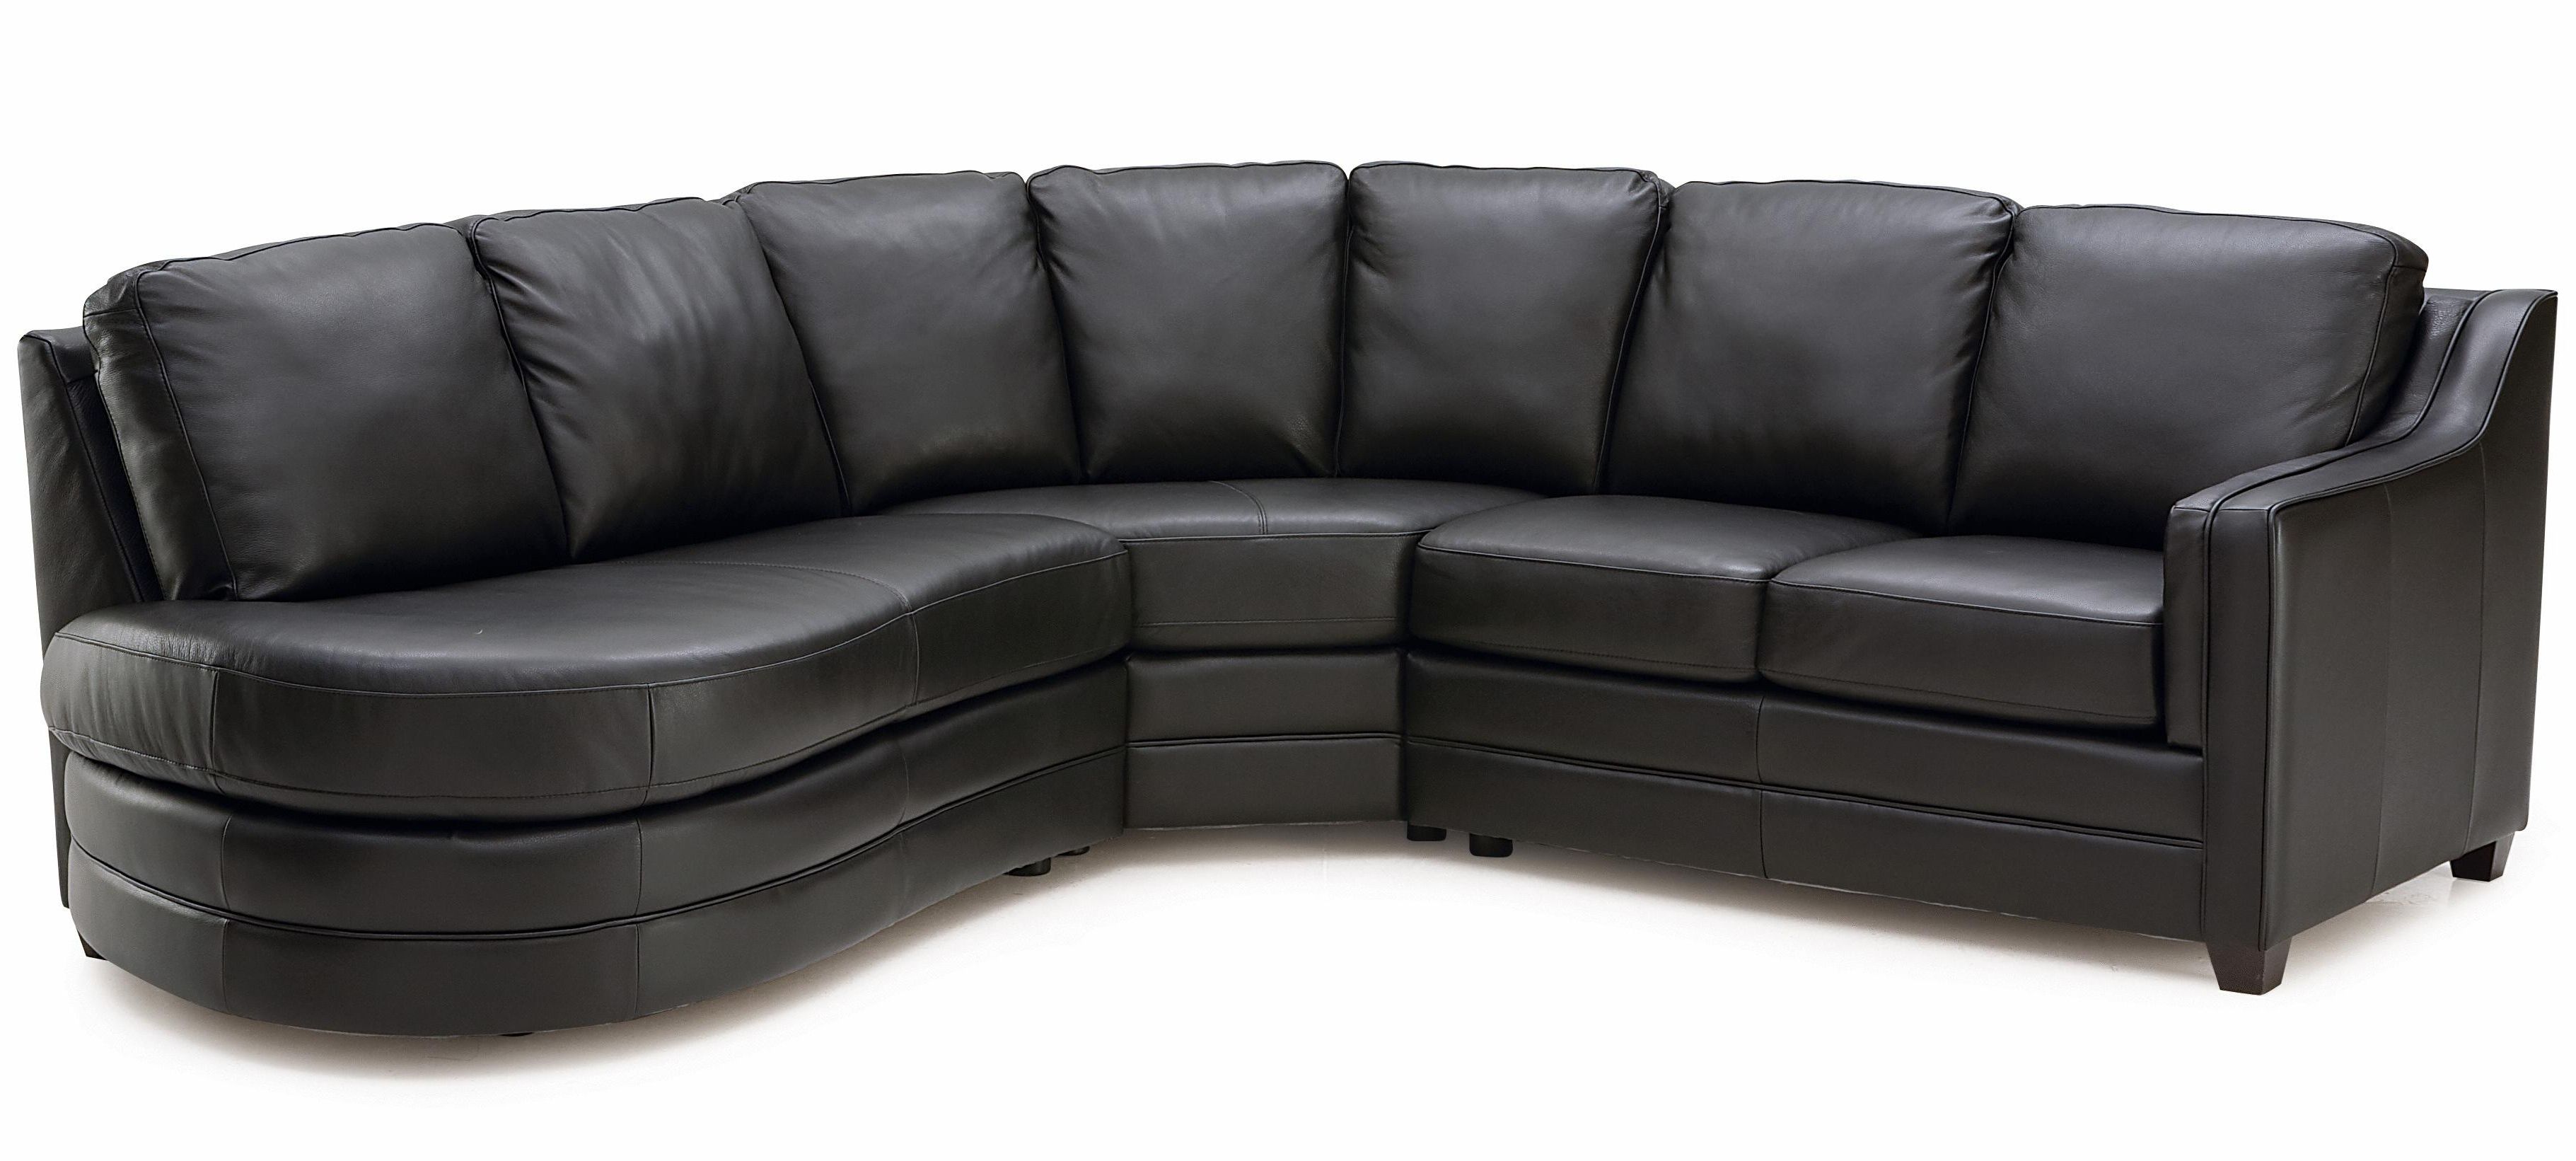 Favorite Sectional Sofas At Buffalo Ny Pertaining To Palliser Corissa Contemporary Sectional Sofa – Ahfa – Sofa (View 13 of 15)